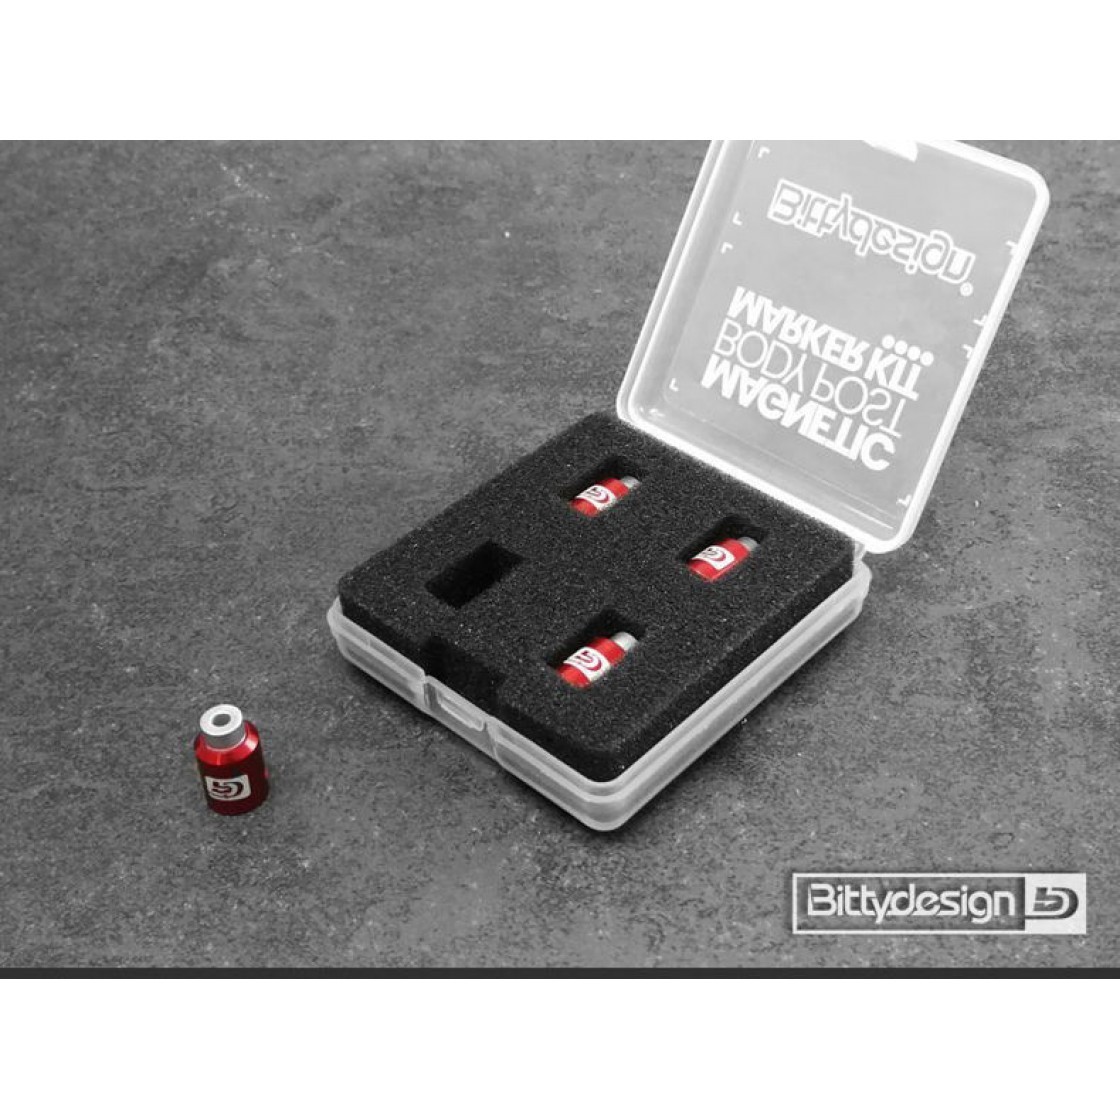 Bittydesign BDBPMK8-R - Body Post Marker Set - 1/5-1/8 - Karosserieloch Tool - rot (4 Stück)